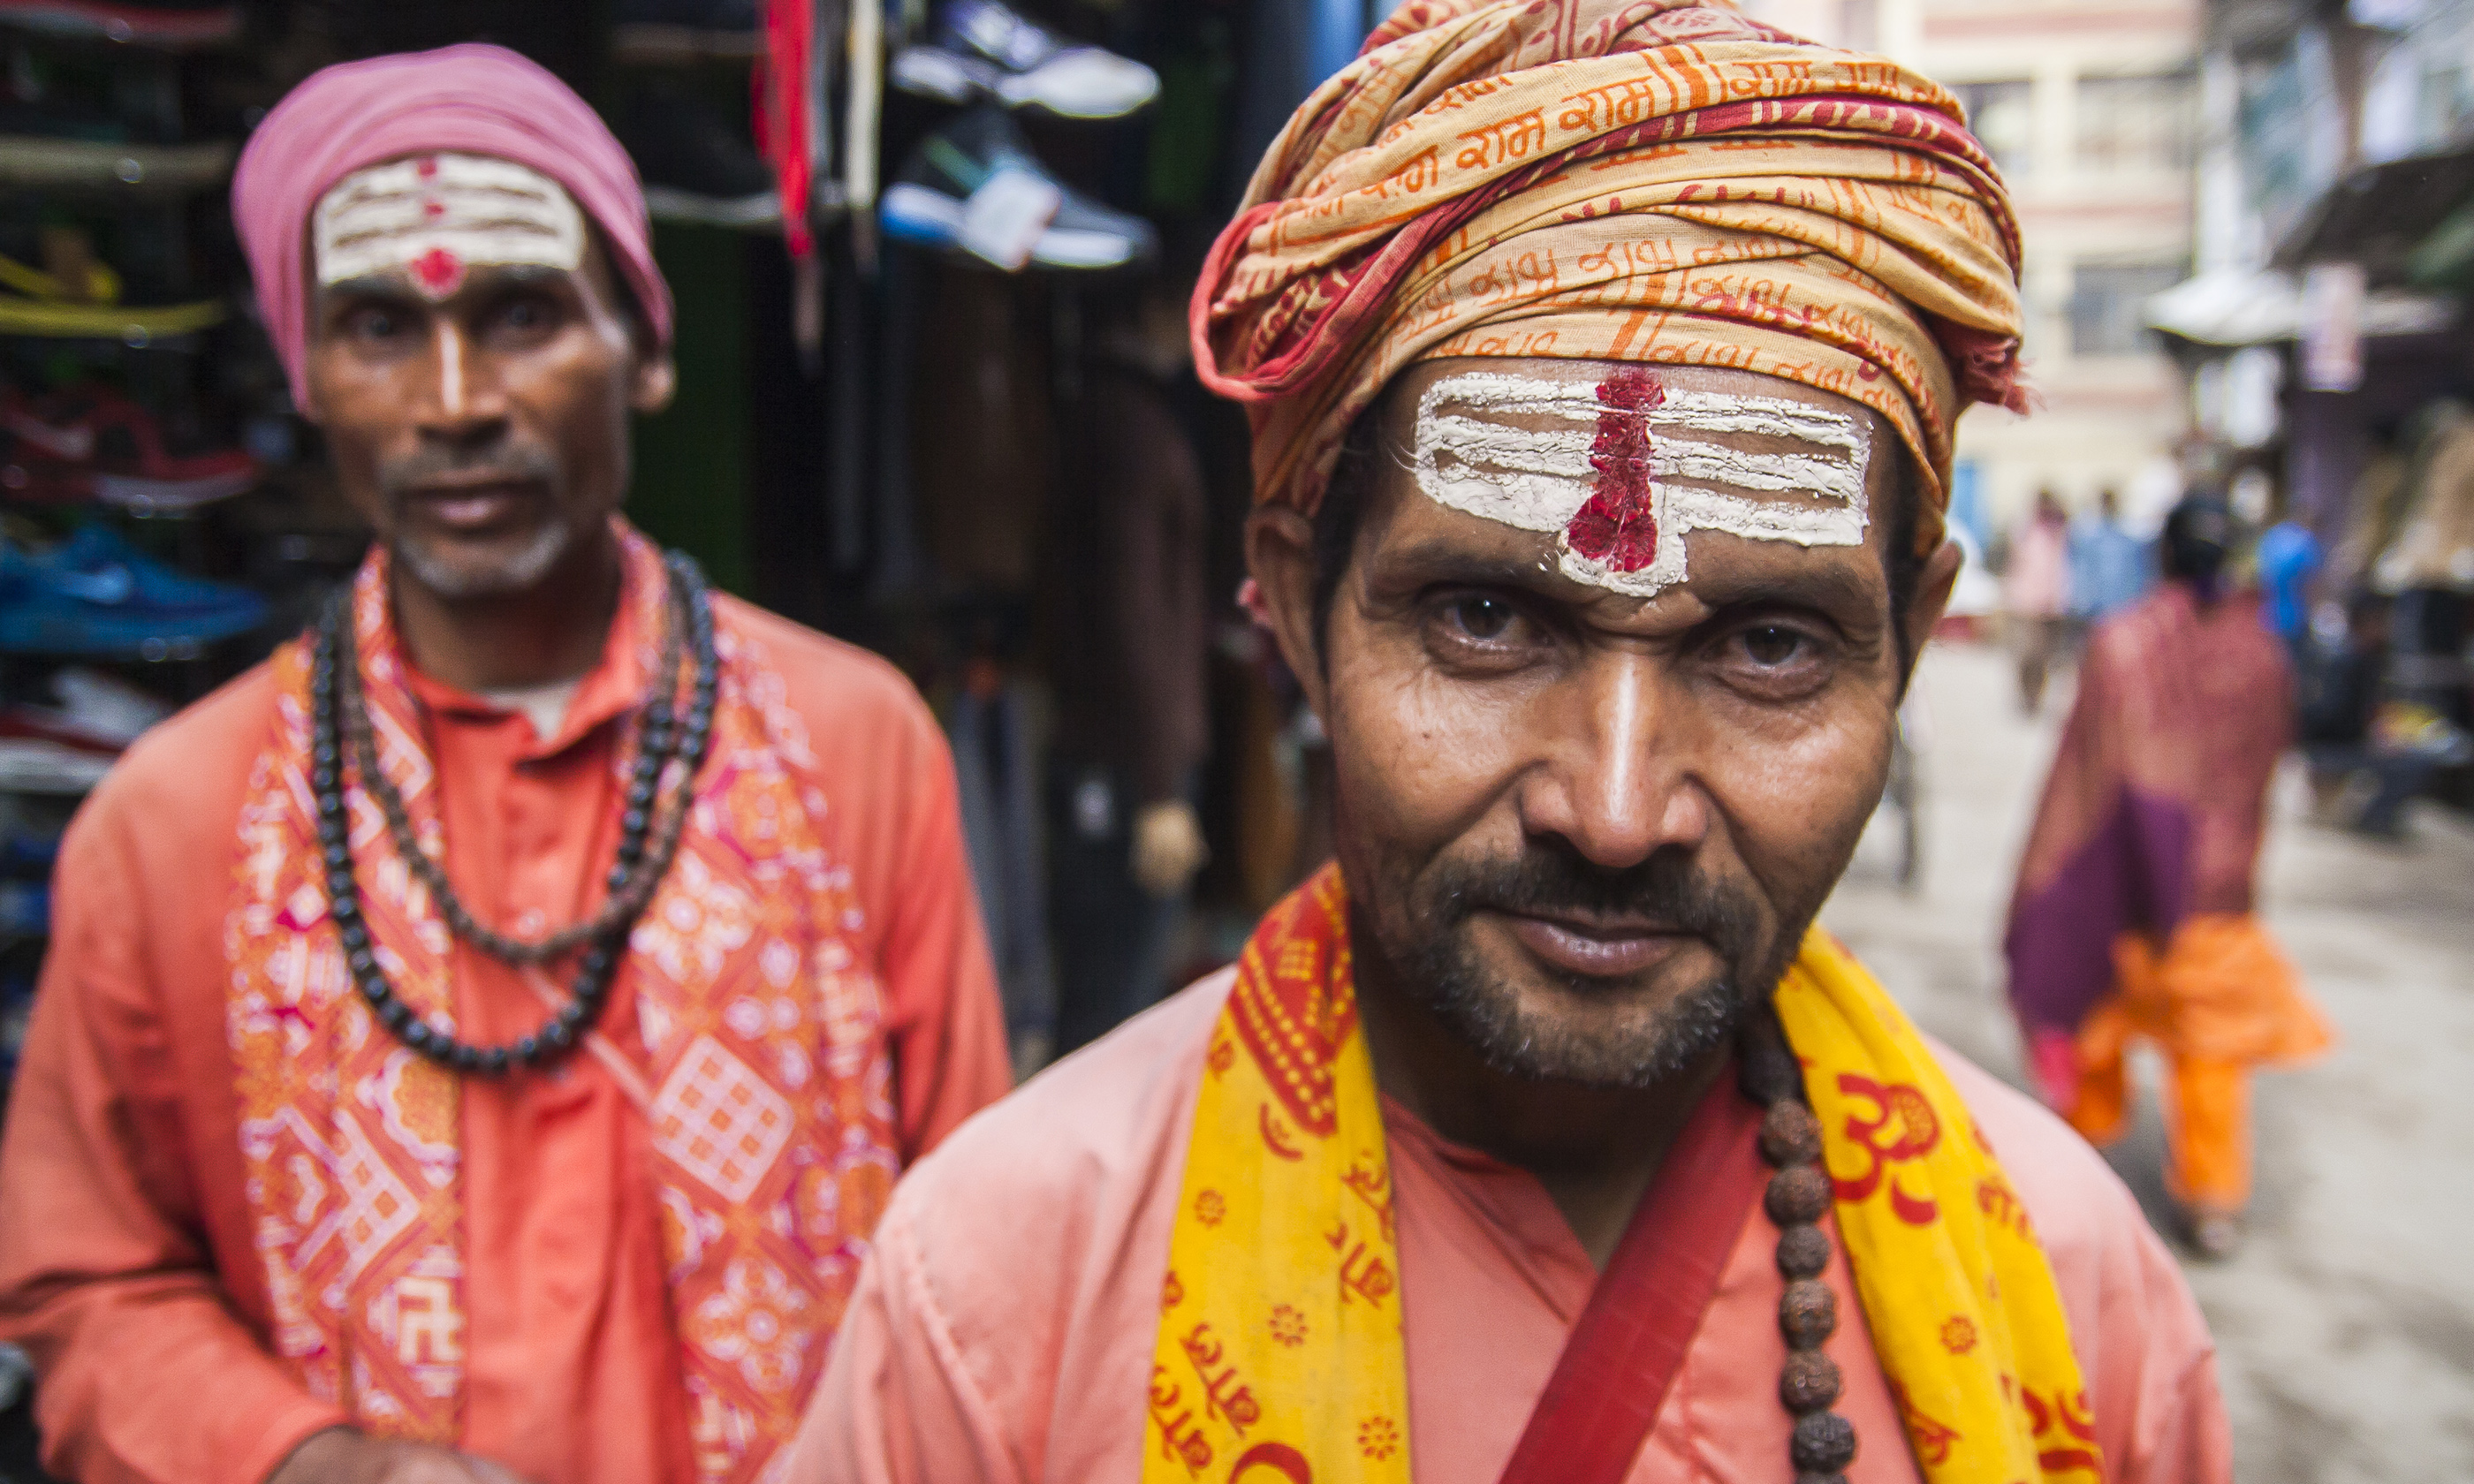 Happy Nepalese (Shutterstock.com)